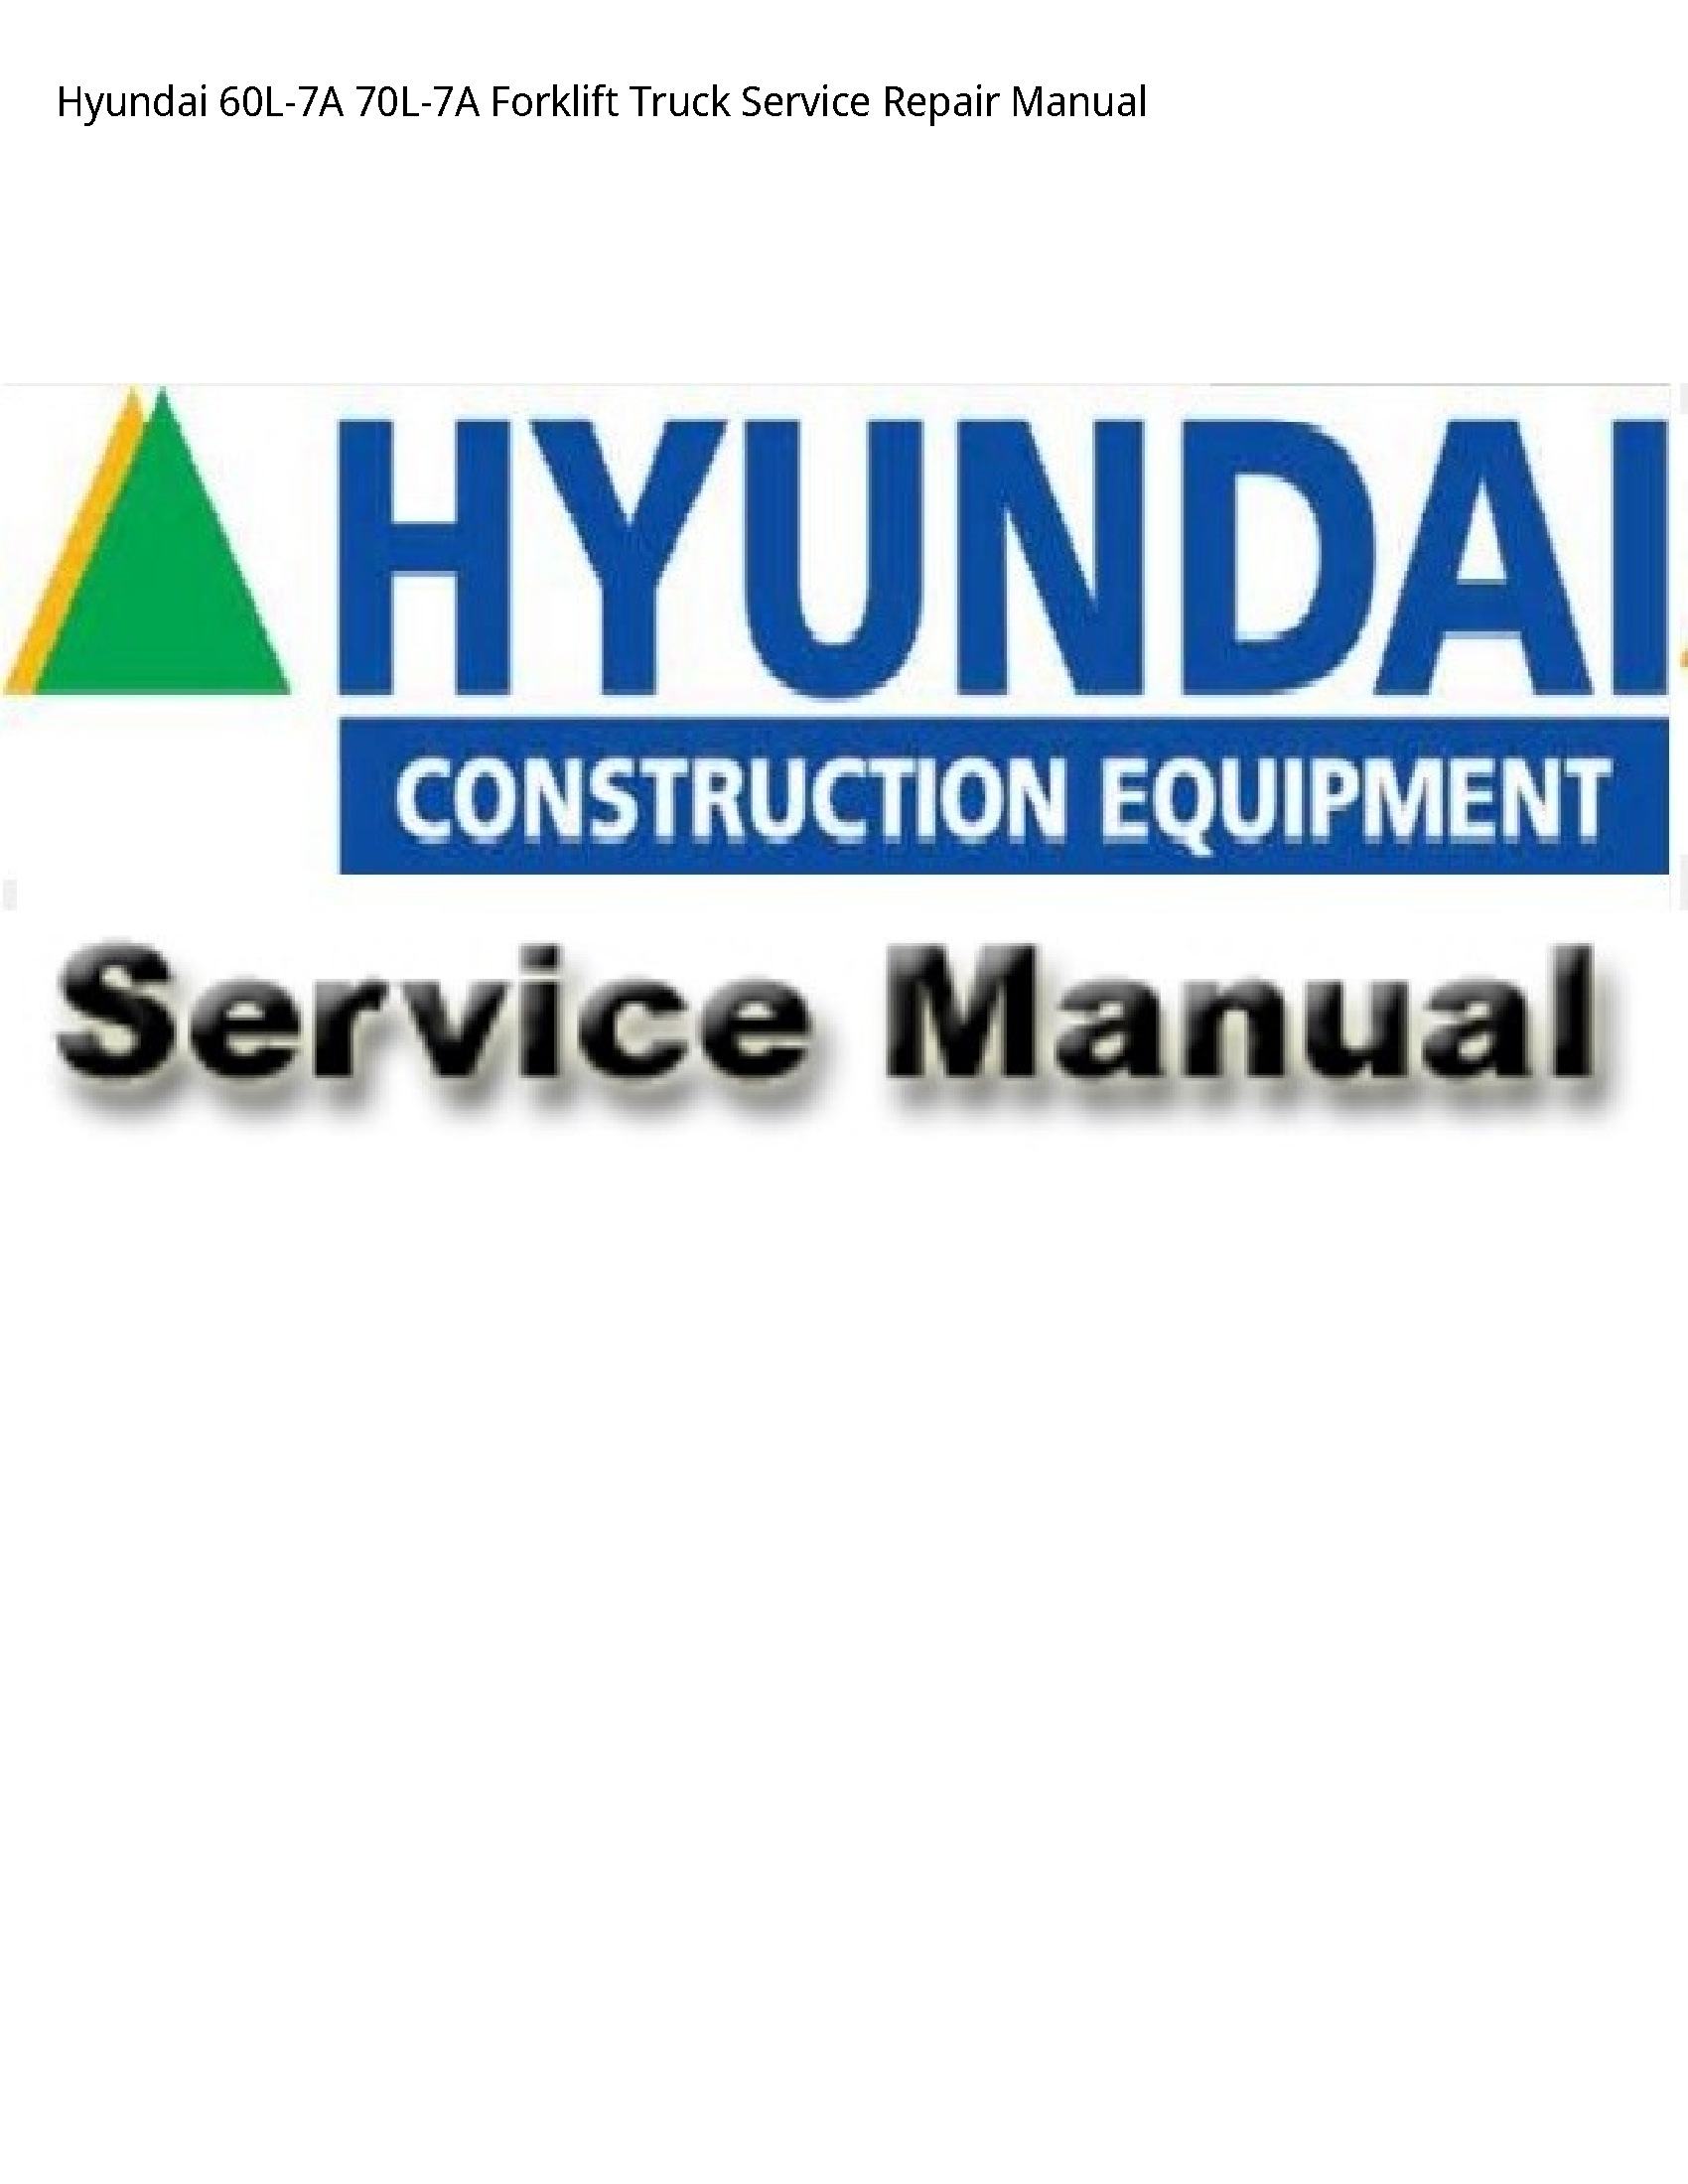 Hyundai 60L-7A Forklift Truck manual